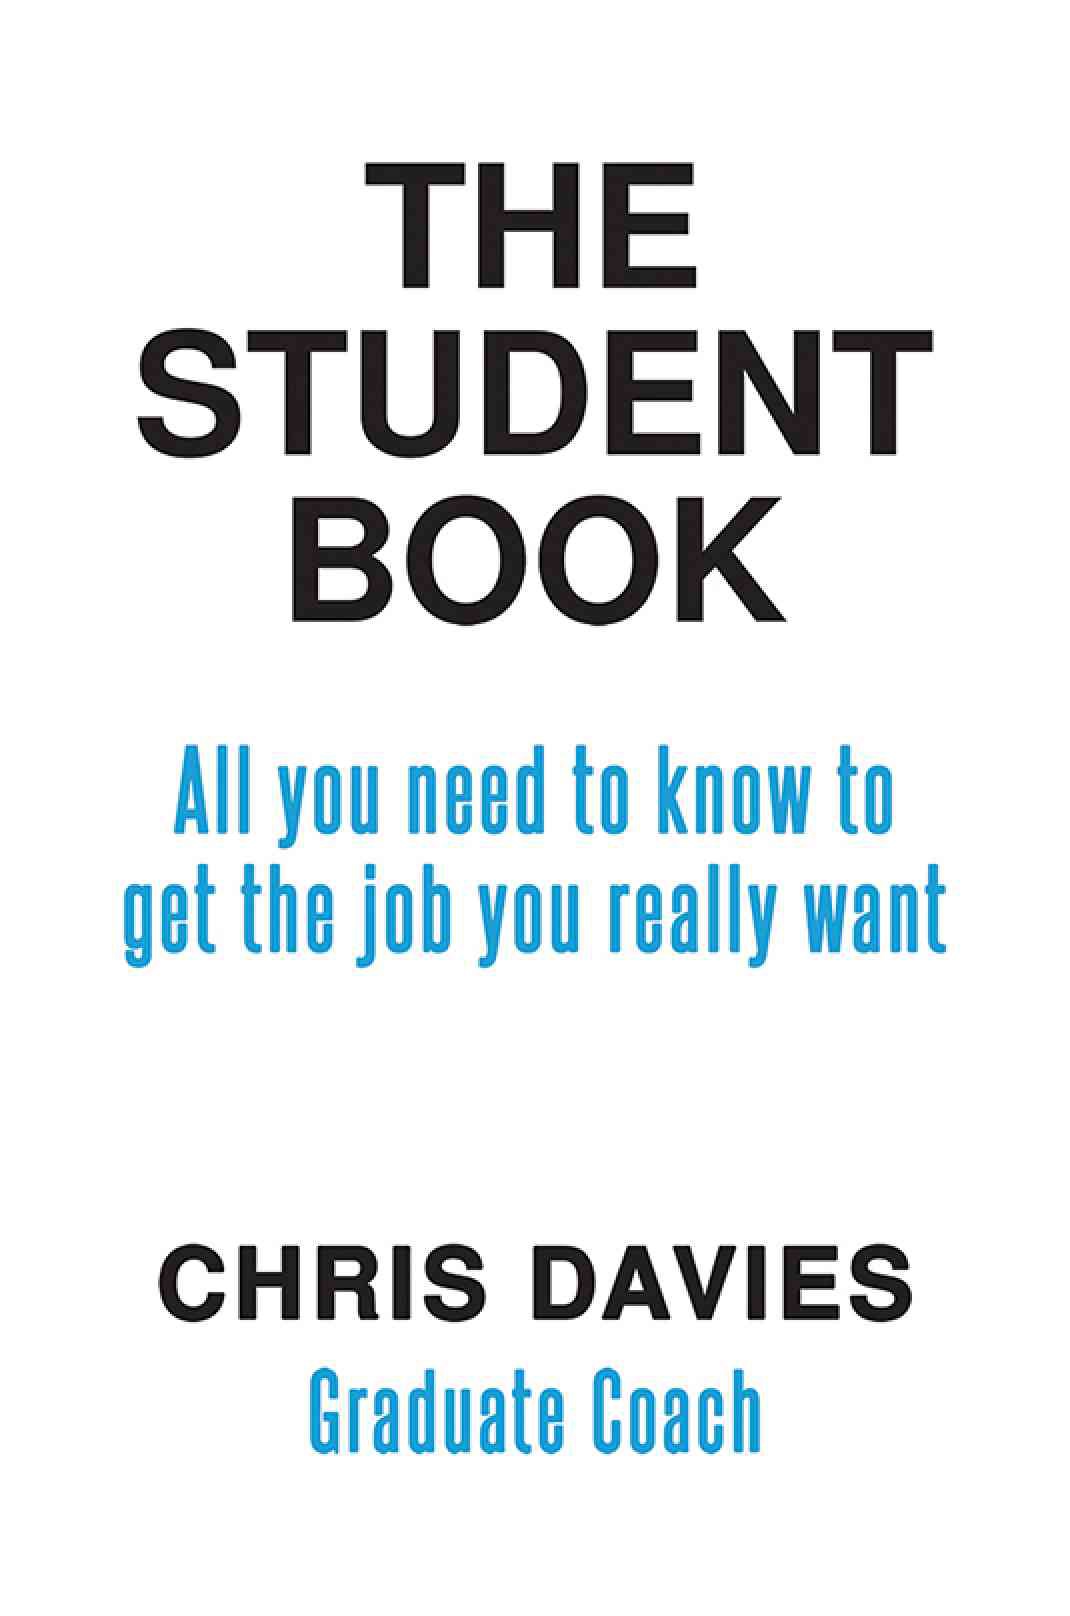 Chris Davies created his Amazon Page